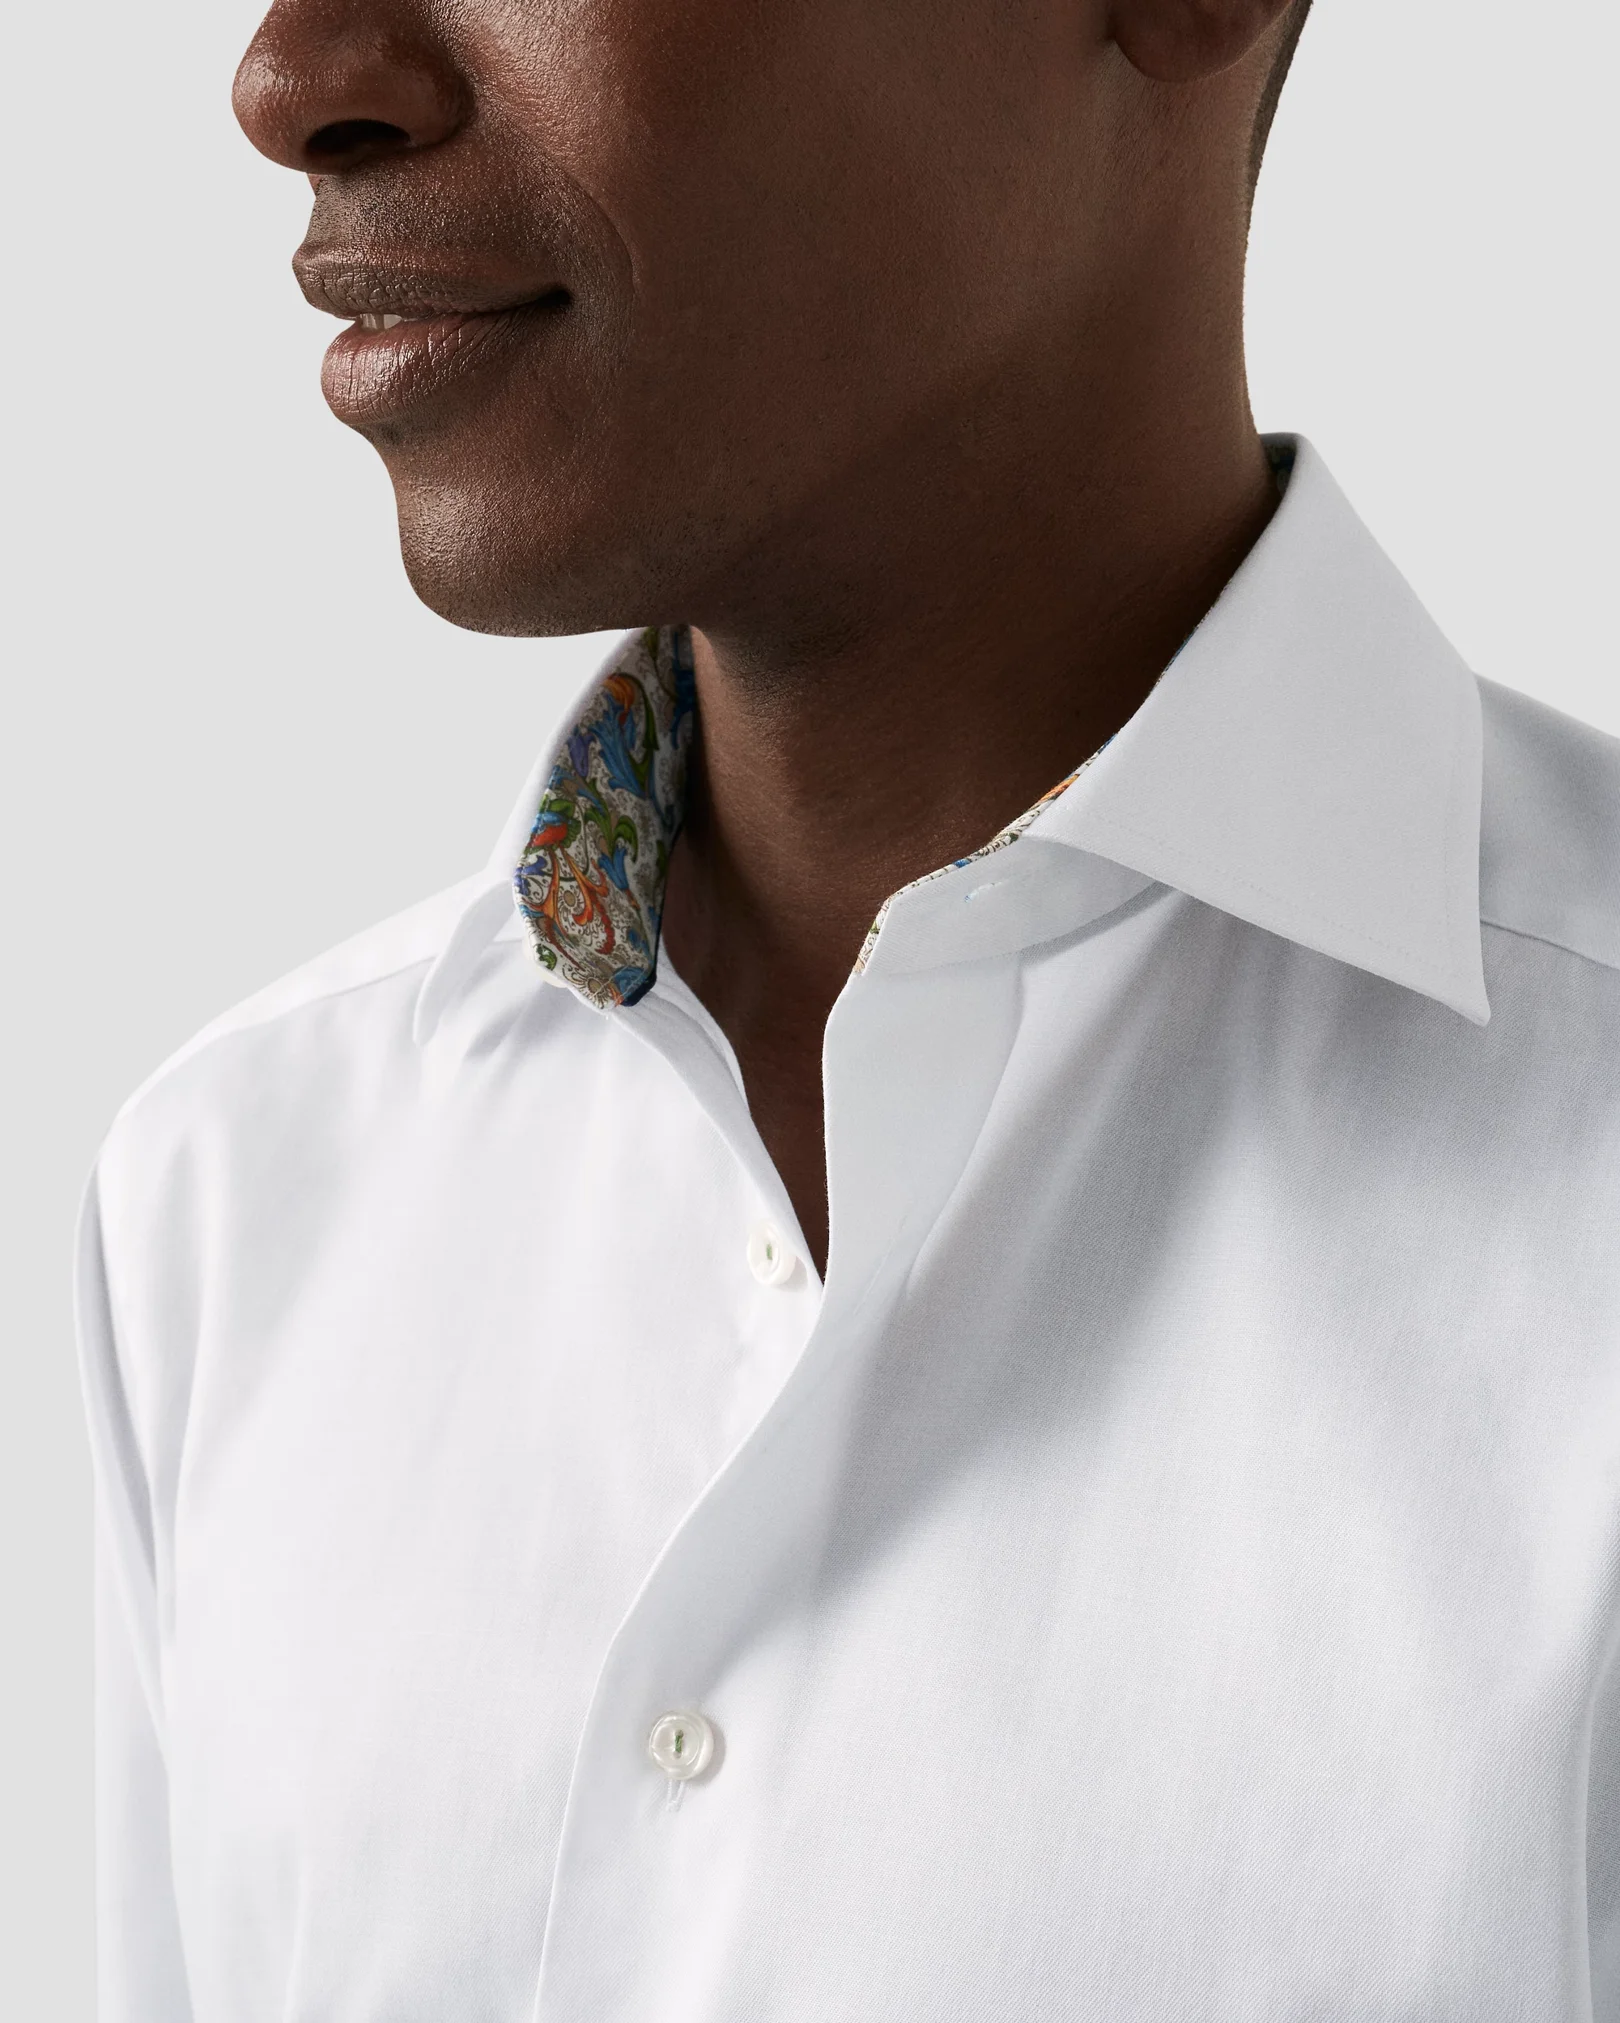 Eton - white signature twill floral cotrast shirt